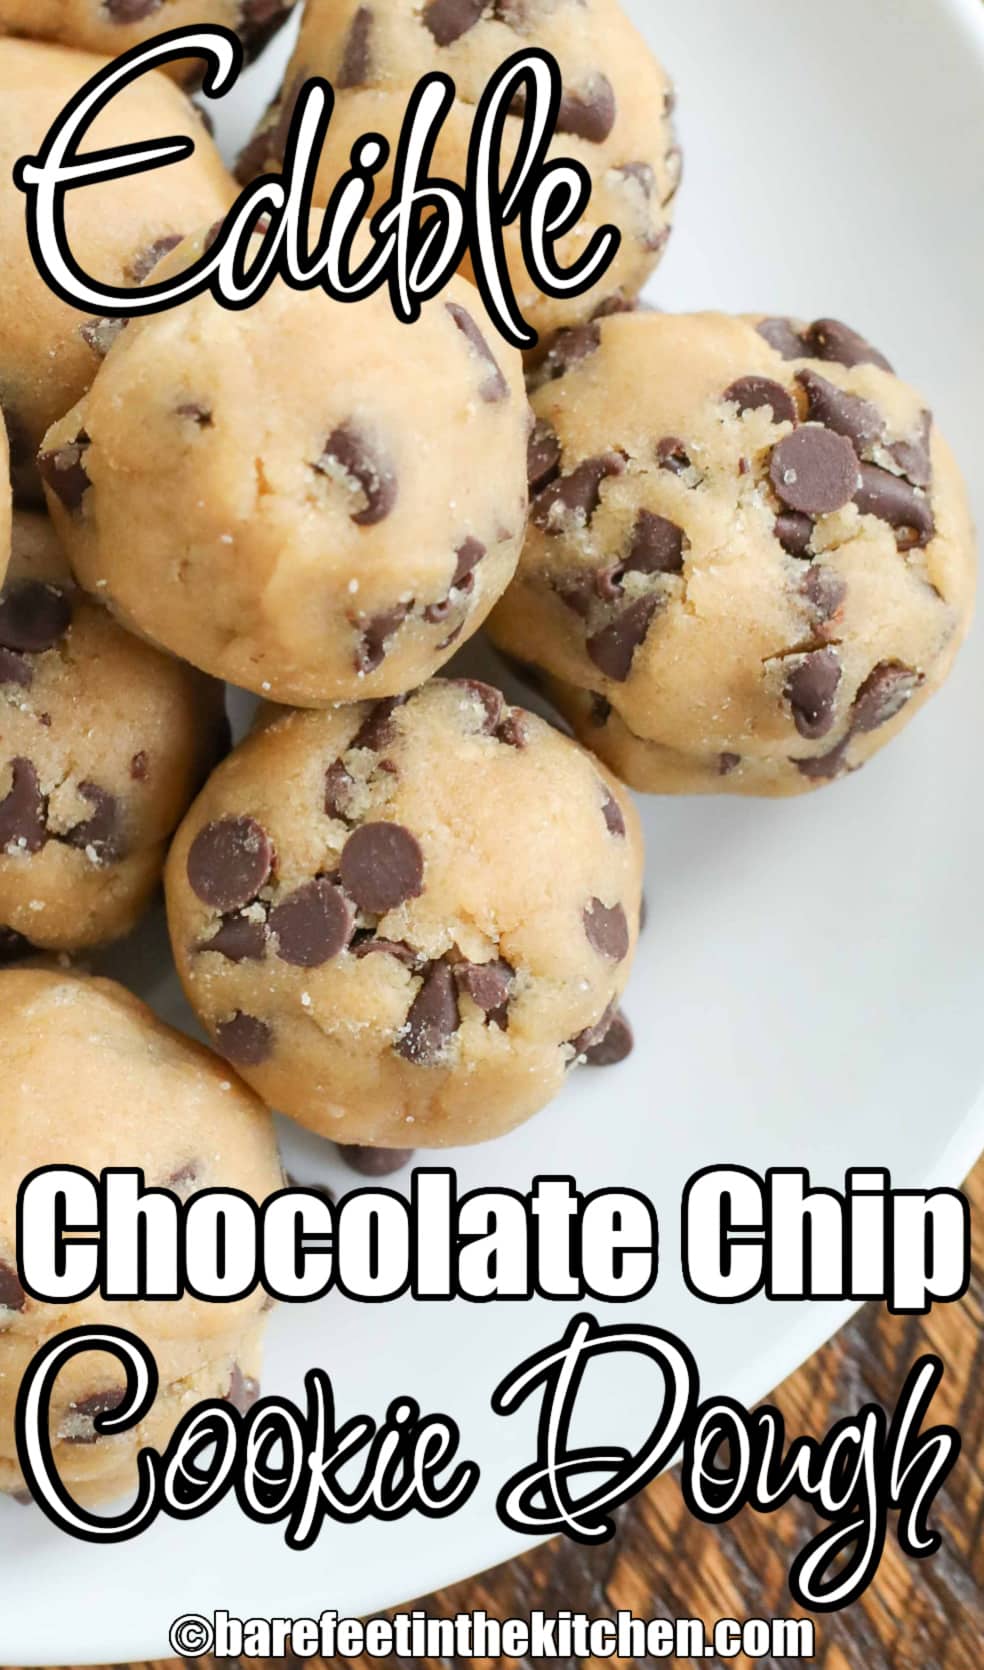 https://barefeetinthekitchen.com/wp-content/uploads/2022/06/Edible-Chocolate-Chip-Cookie-Dough-pin-photo.jpg